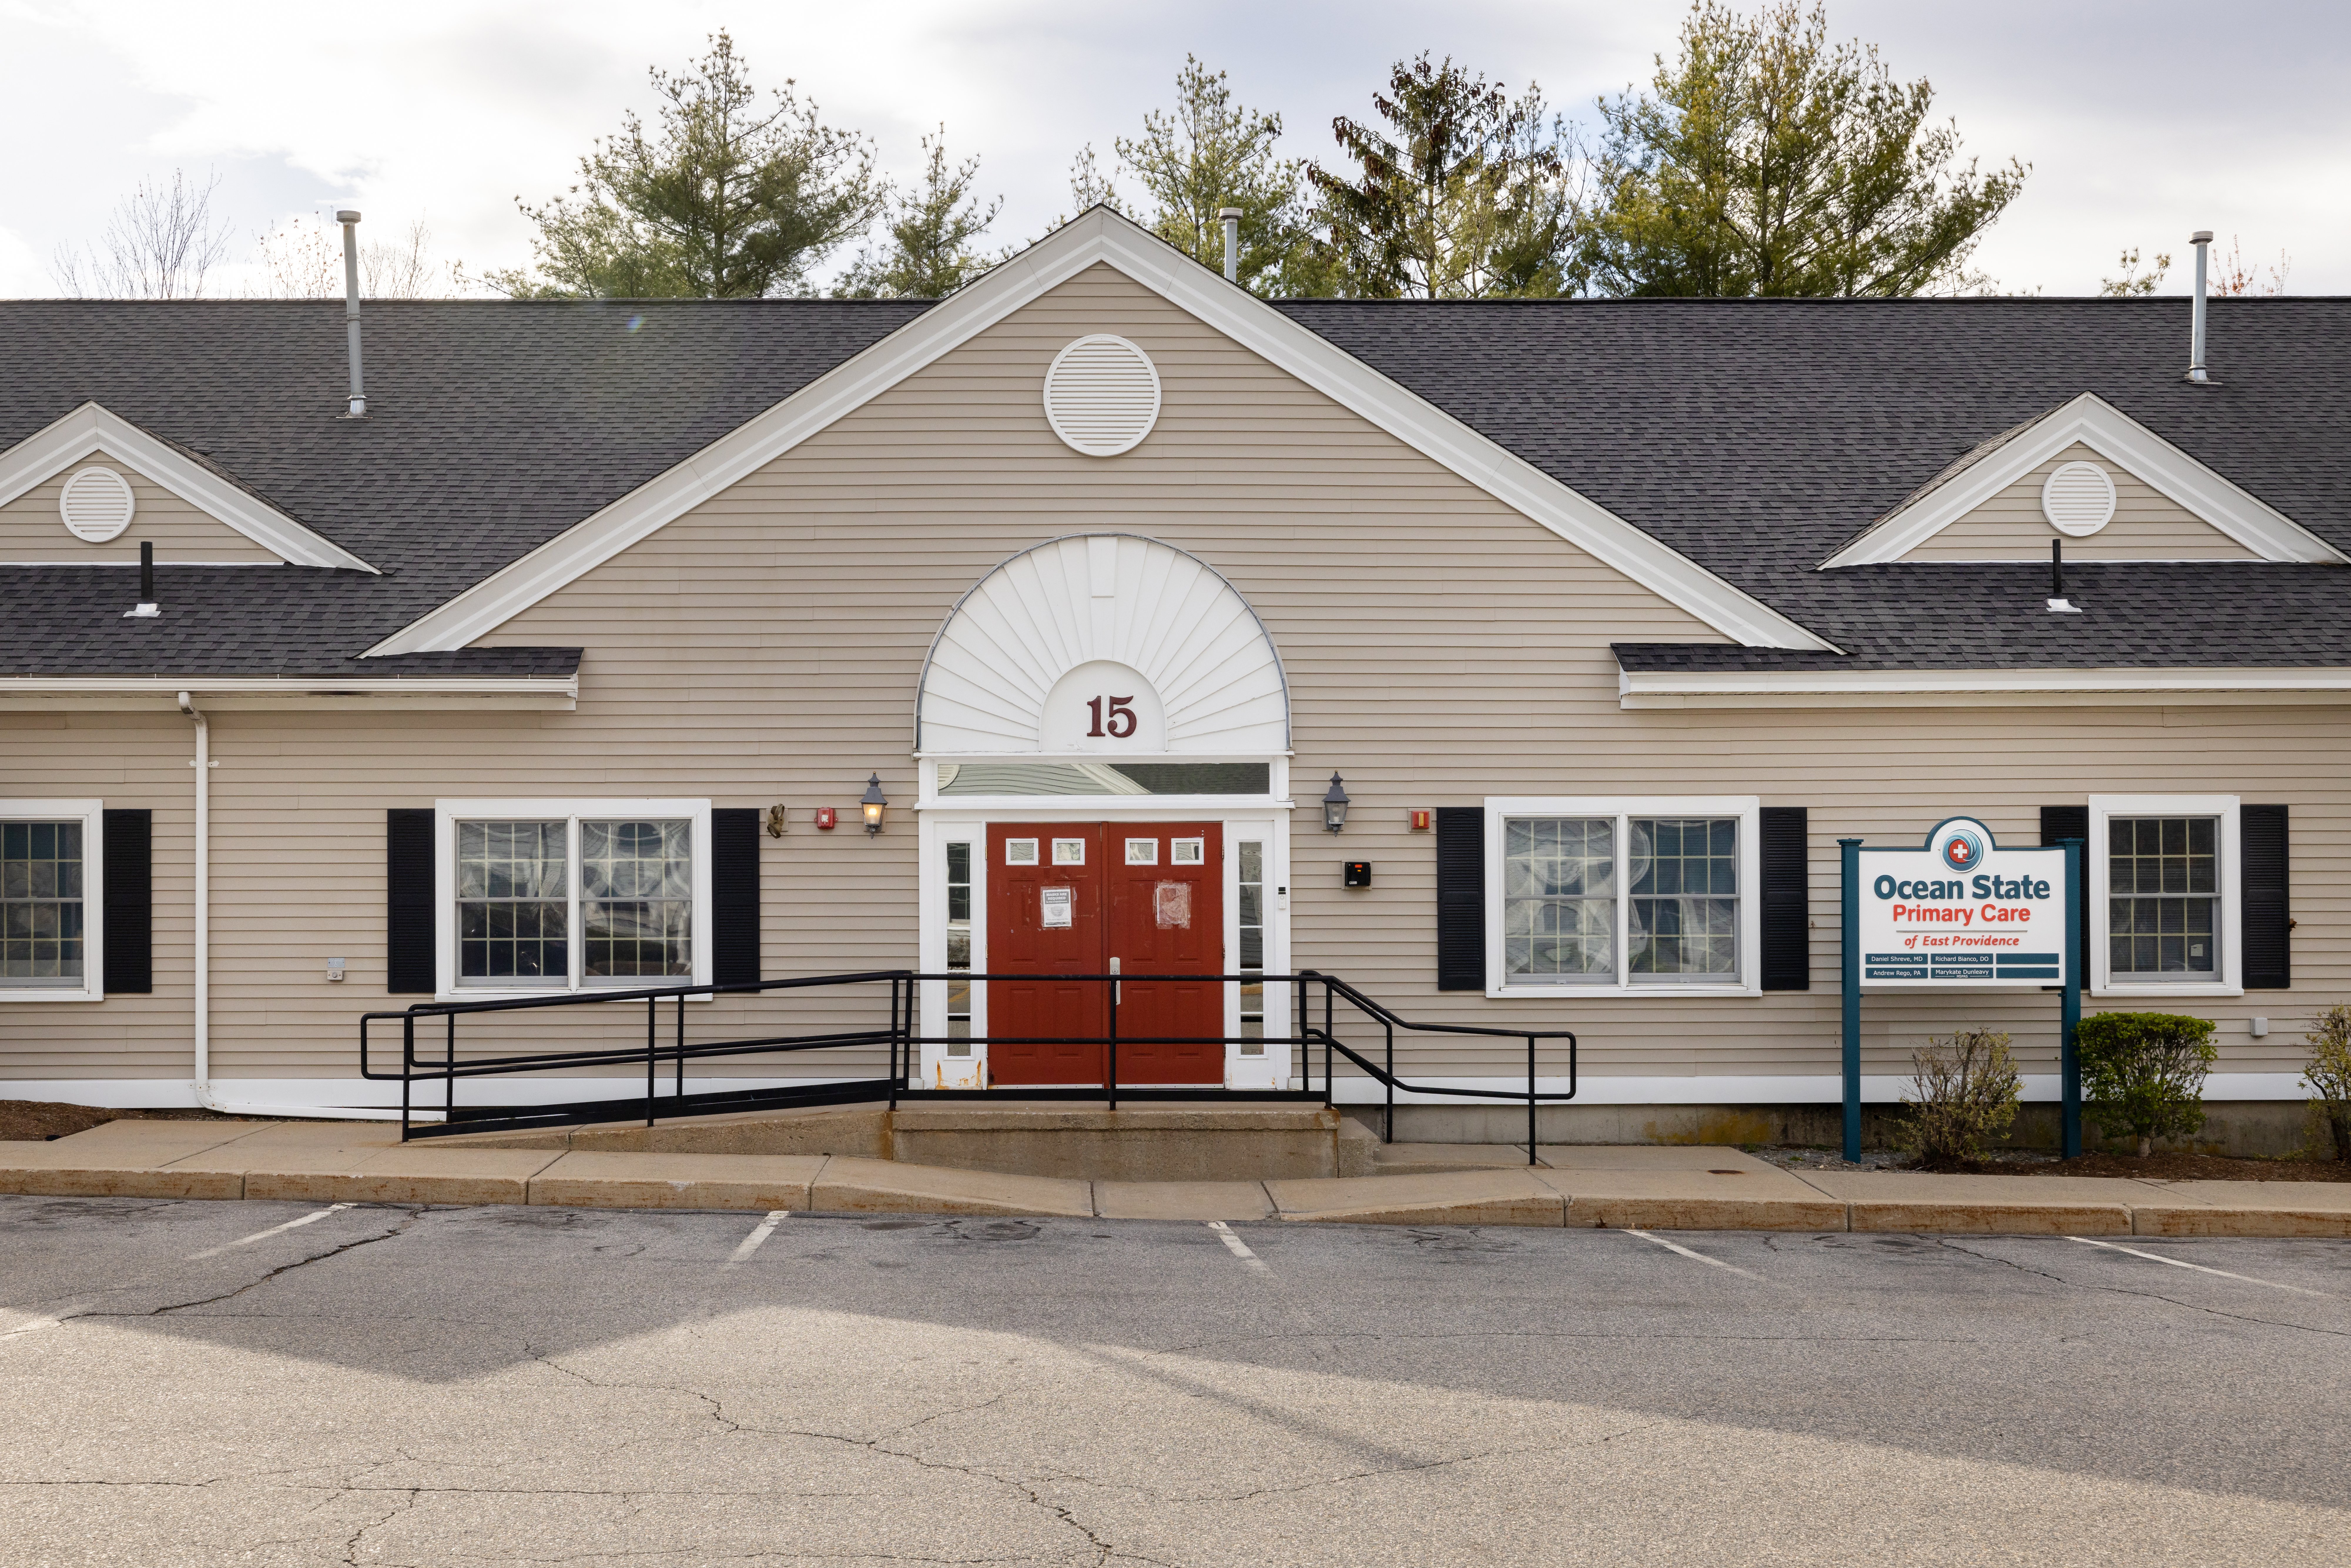 Village Medical - Ocean State Primary Care Center of East Providence, Inc. - 450 Veterans Memorial Pkwy.,  East Providence, RI, 2914.